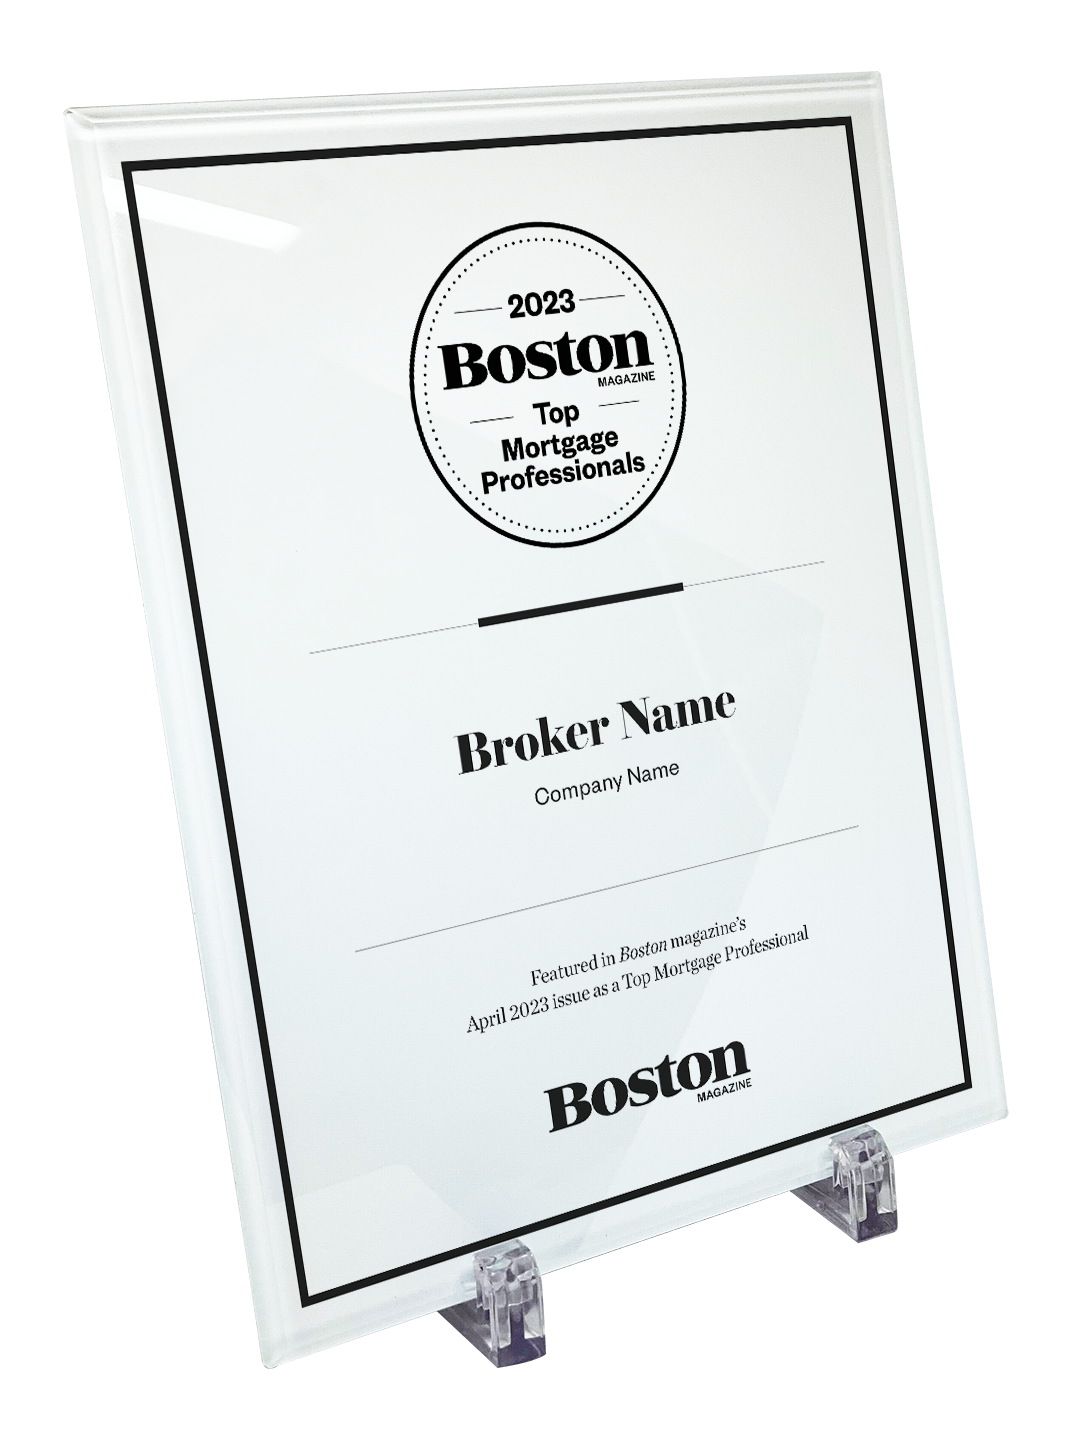 Boston Magazine Top Mortgage Professionals - Crystal Glass Plaque